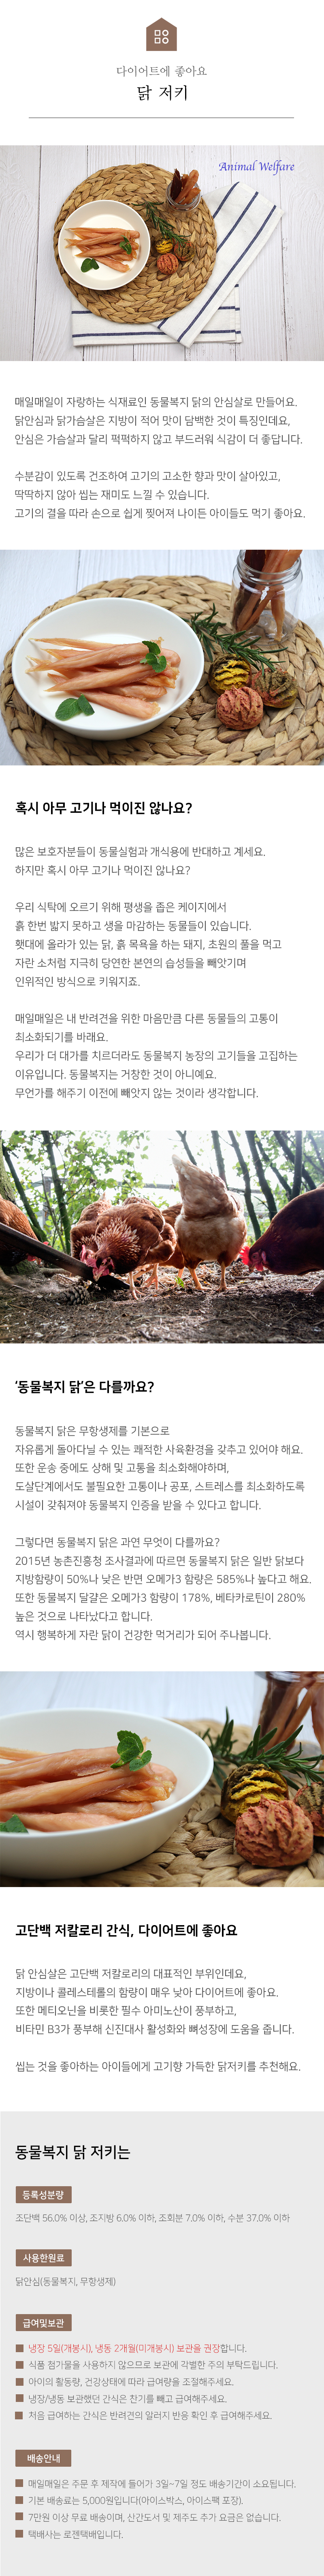 chicken02_232325.jpg